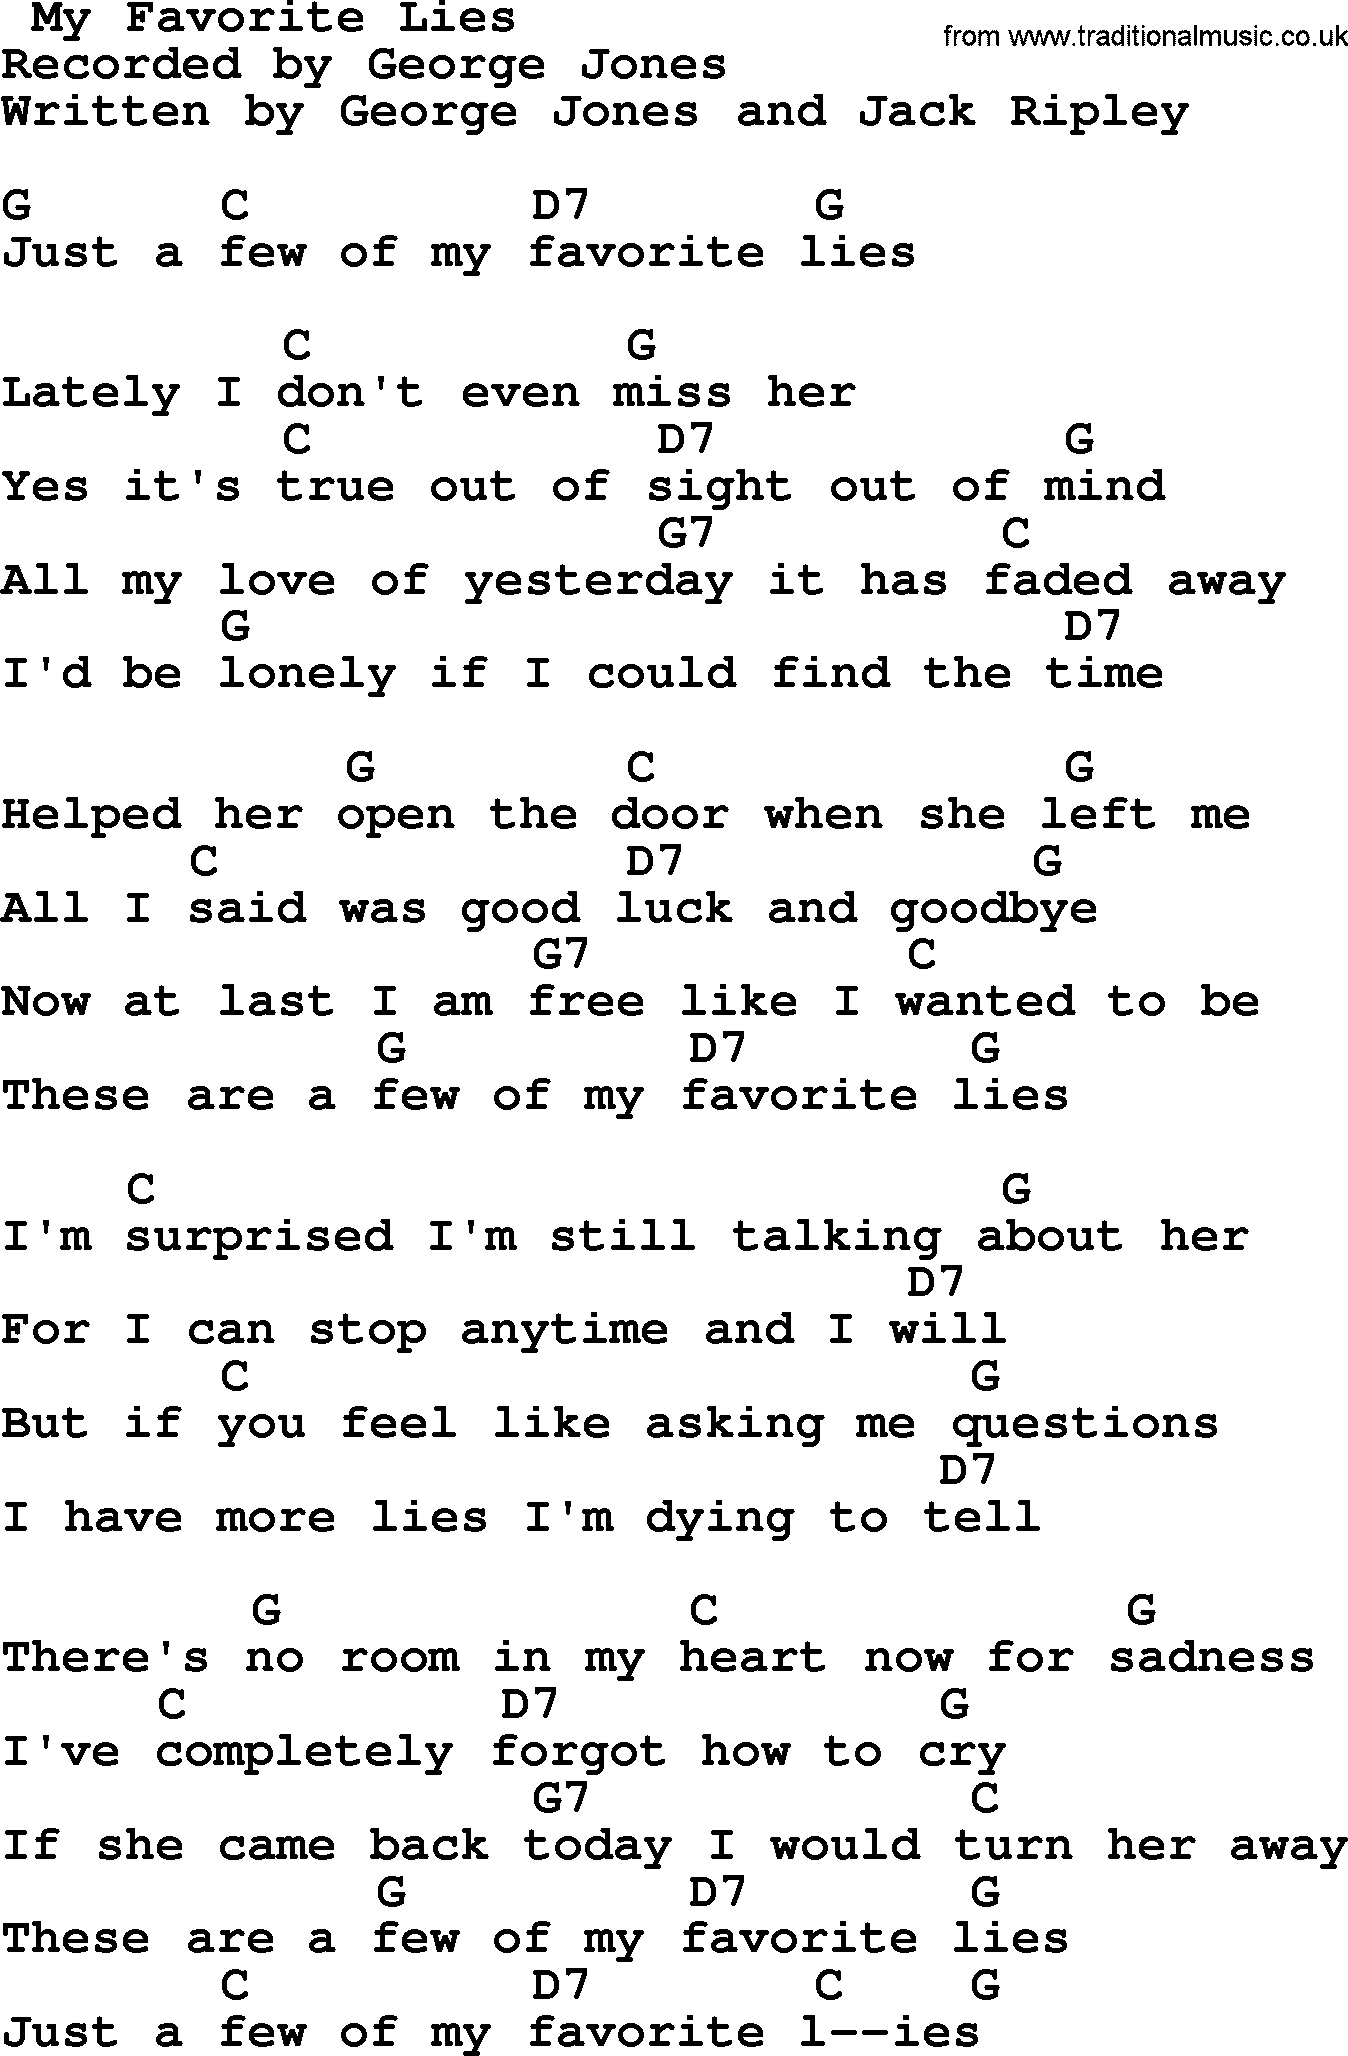 George Jones song: My Favorite Lies, lyrics and chords